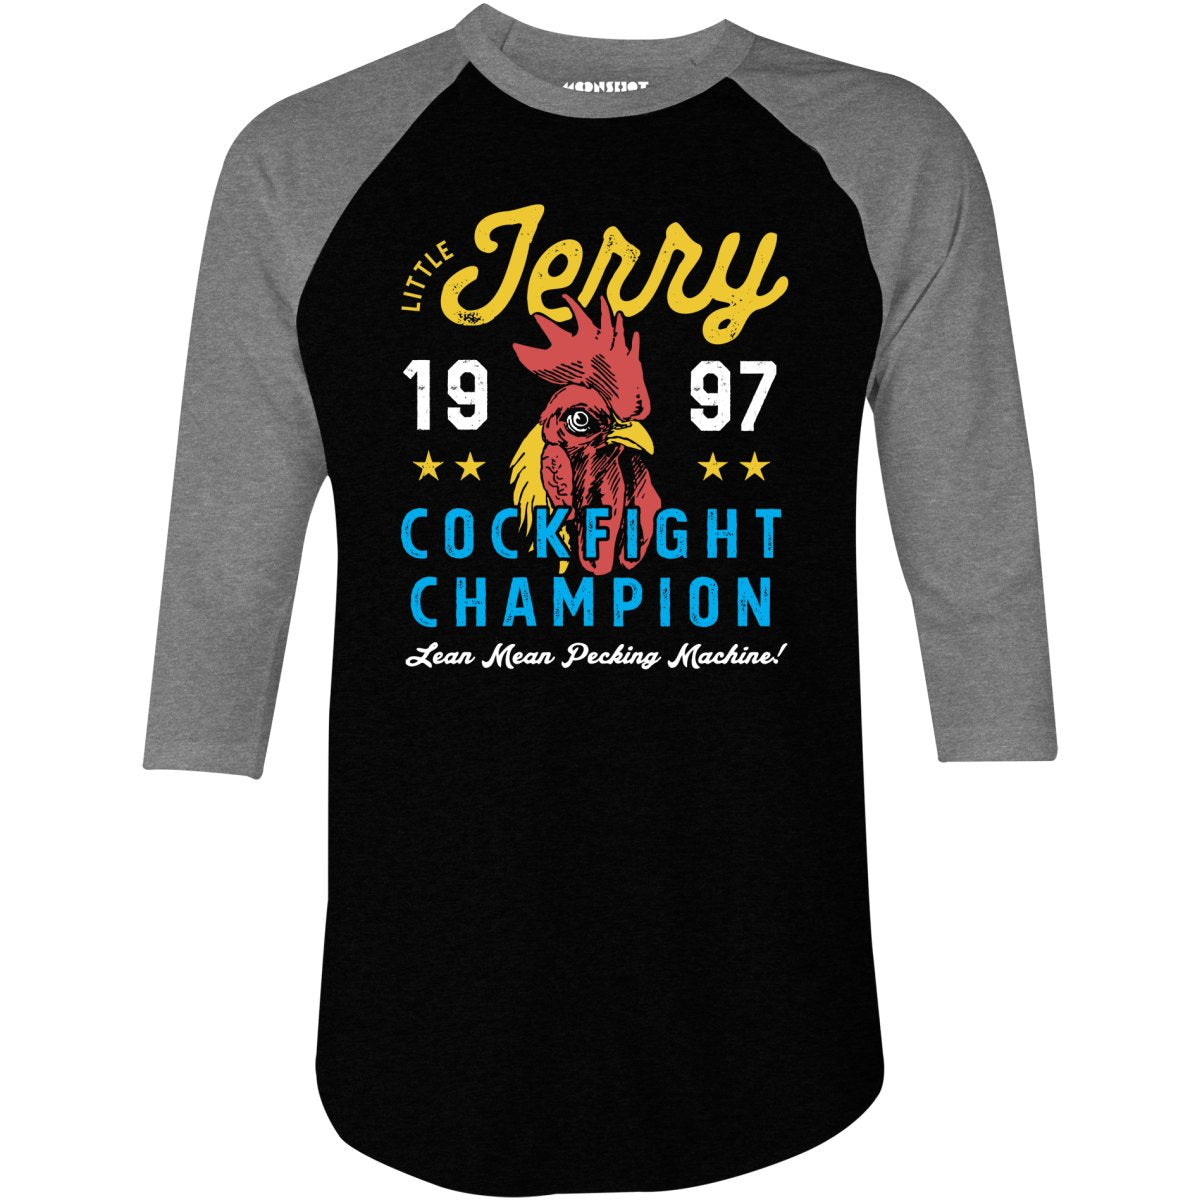 Little Jerry Cockfight Champion - 3/4 Sleeve Raglan T-Shirt